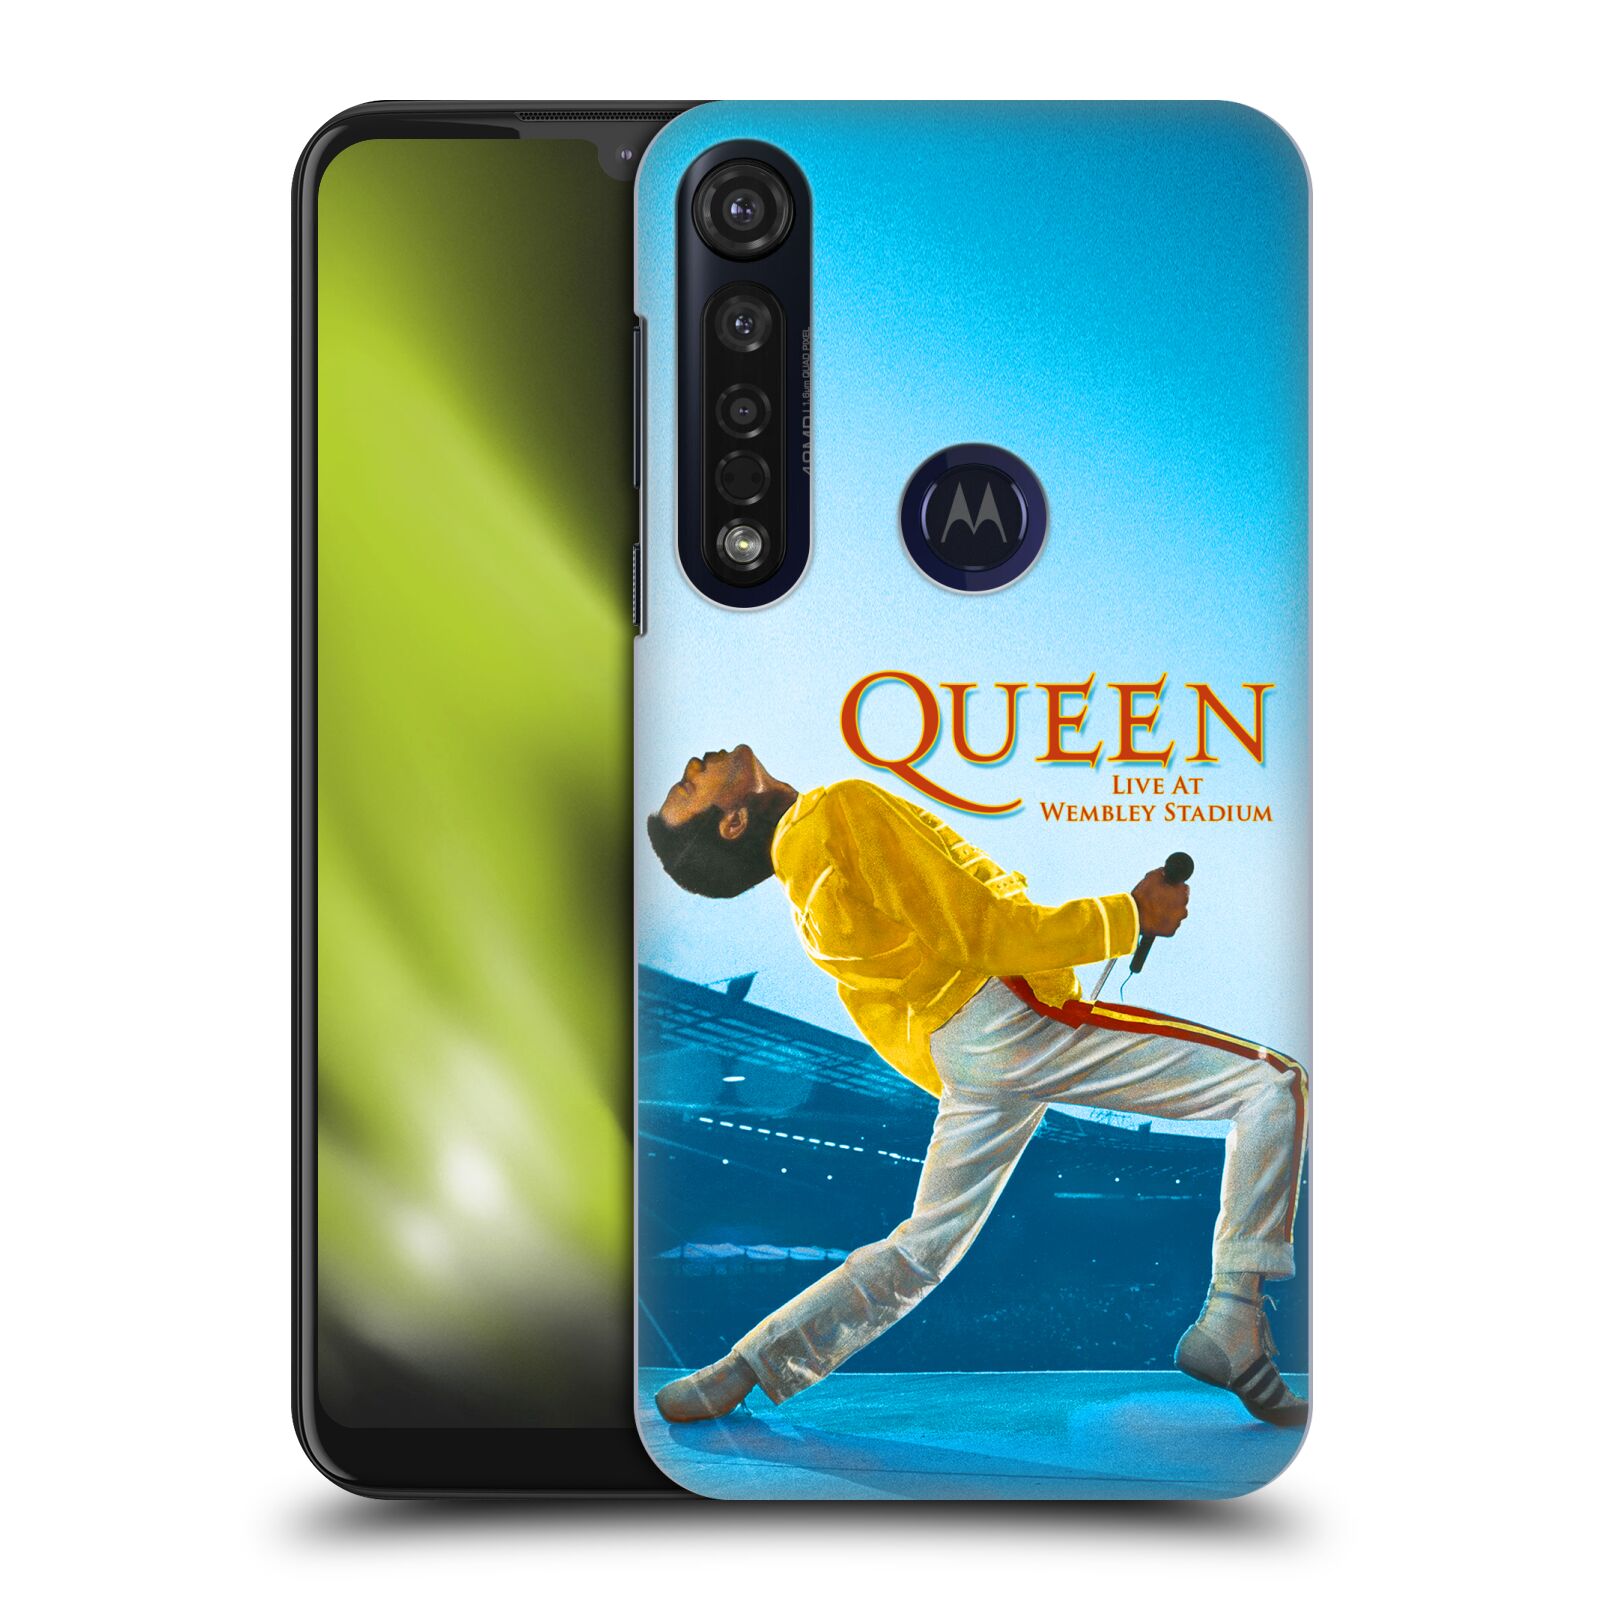 Pouzdro na mobil Motorola Moto G8 PLUS - HEAD CASE - zpěvák Queen skupina Freddie Mercury